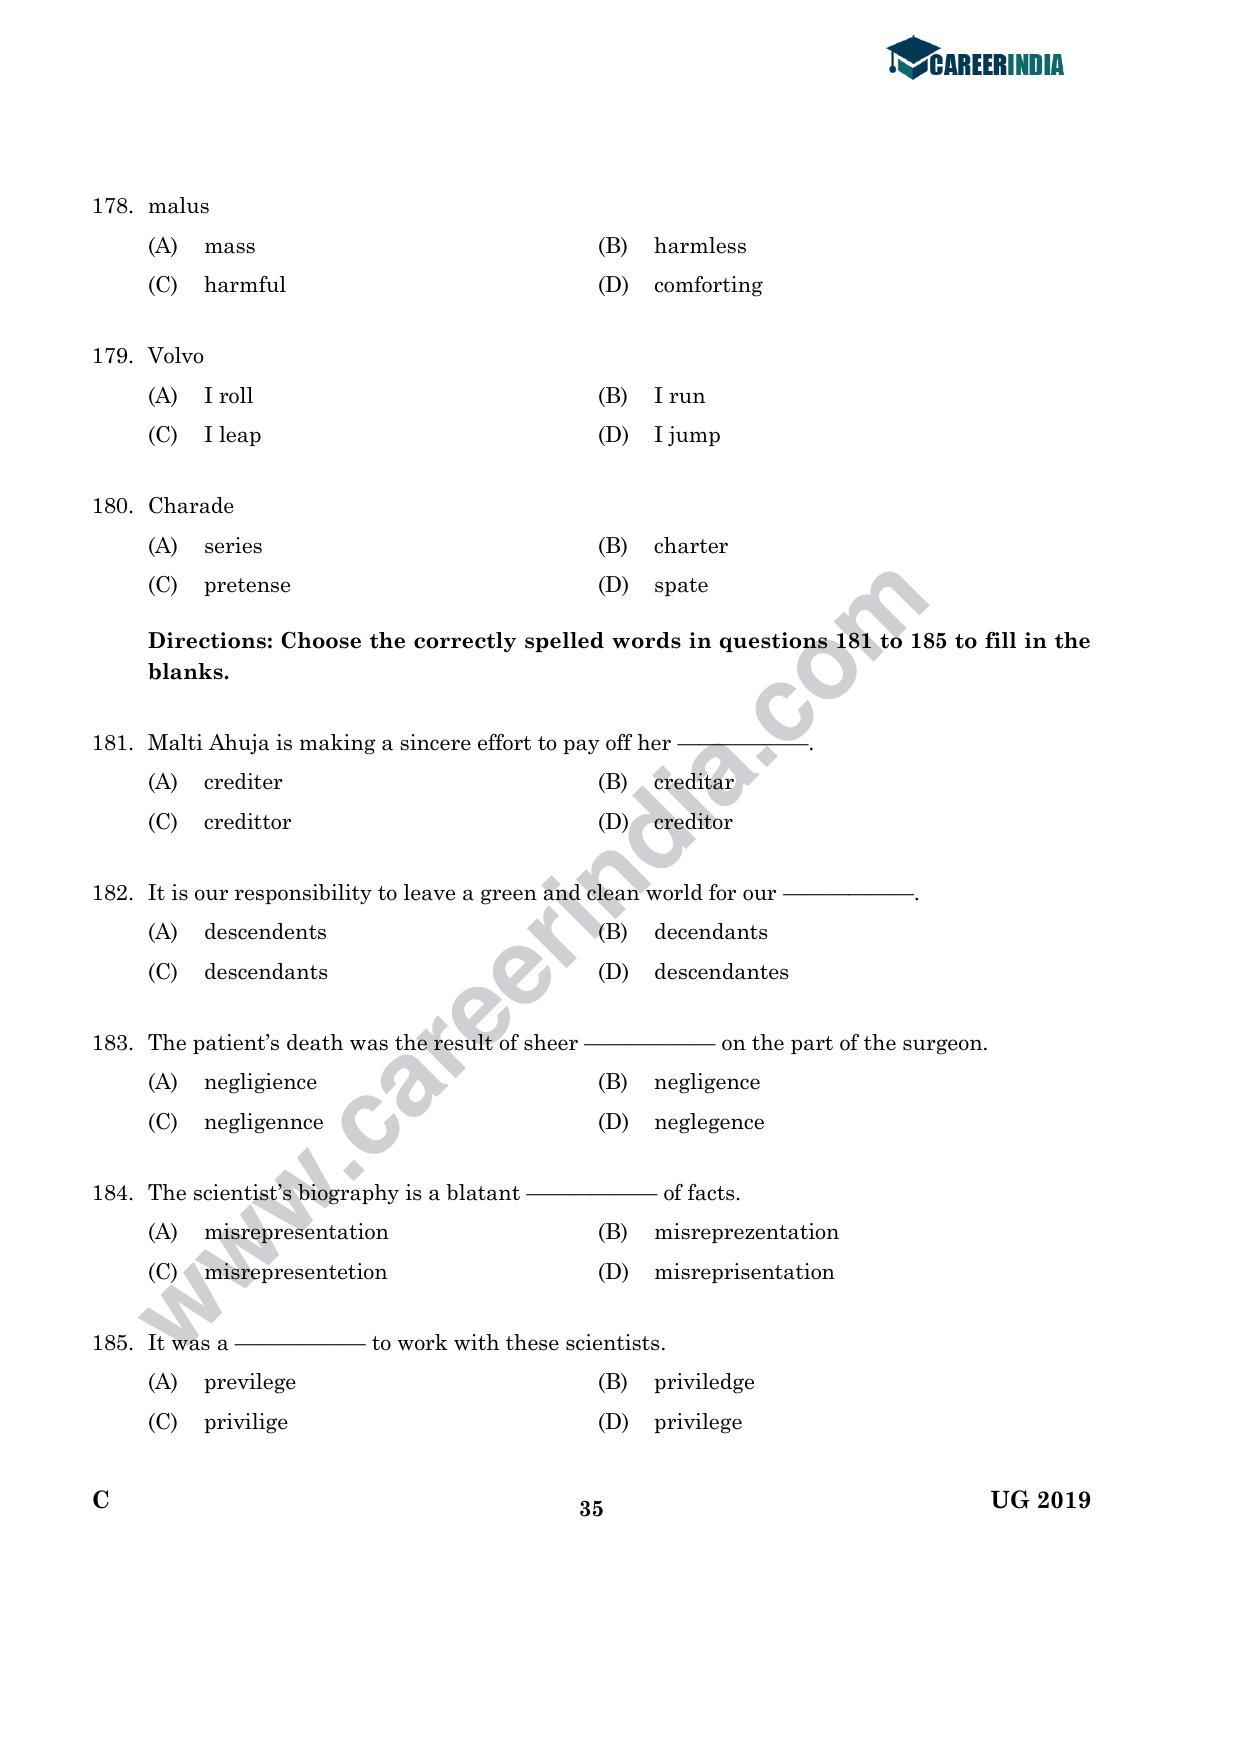 CLAT 2019 UG Legal-Aptitude Question Paper - Page 34